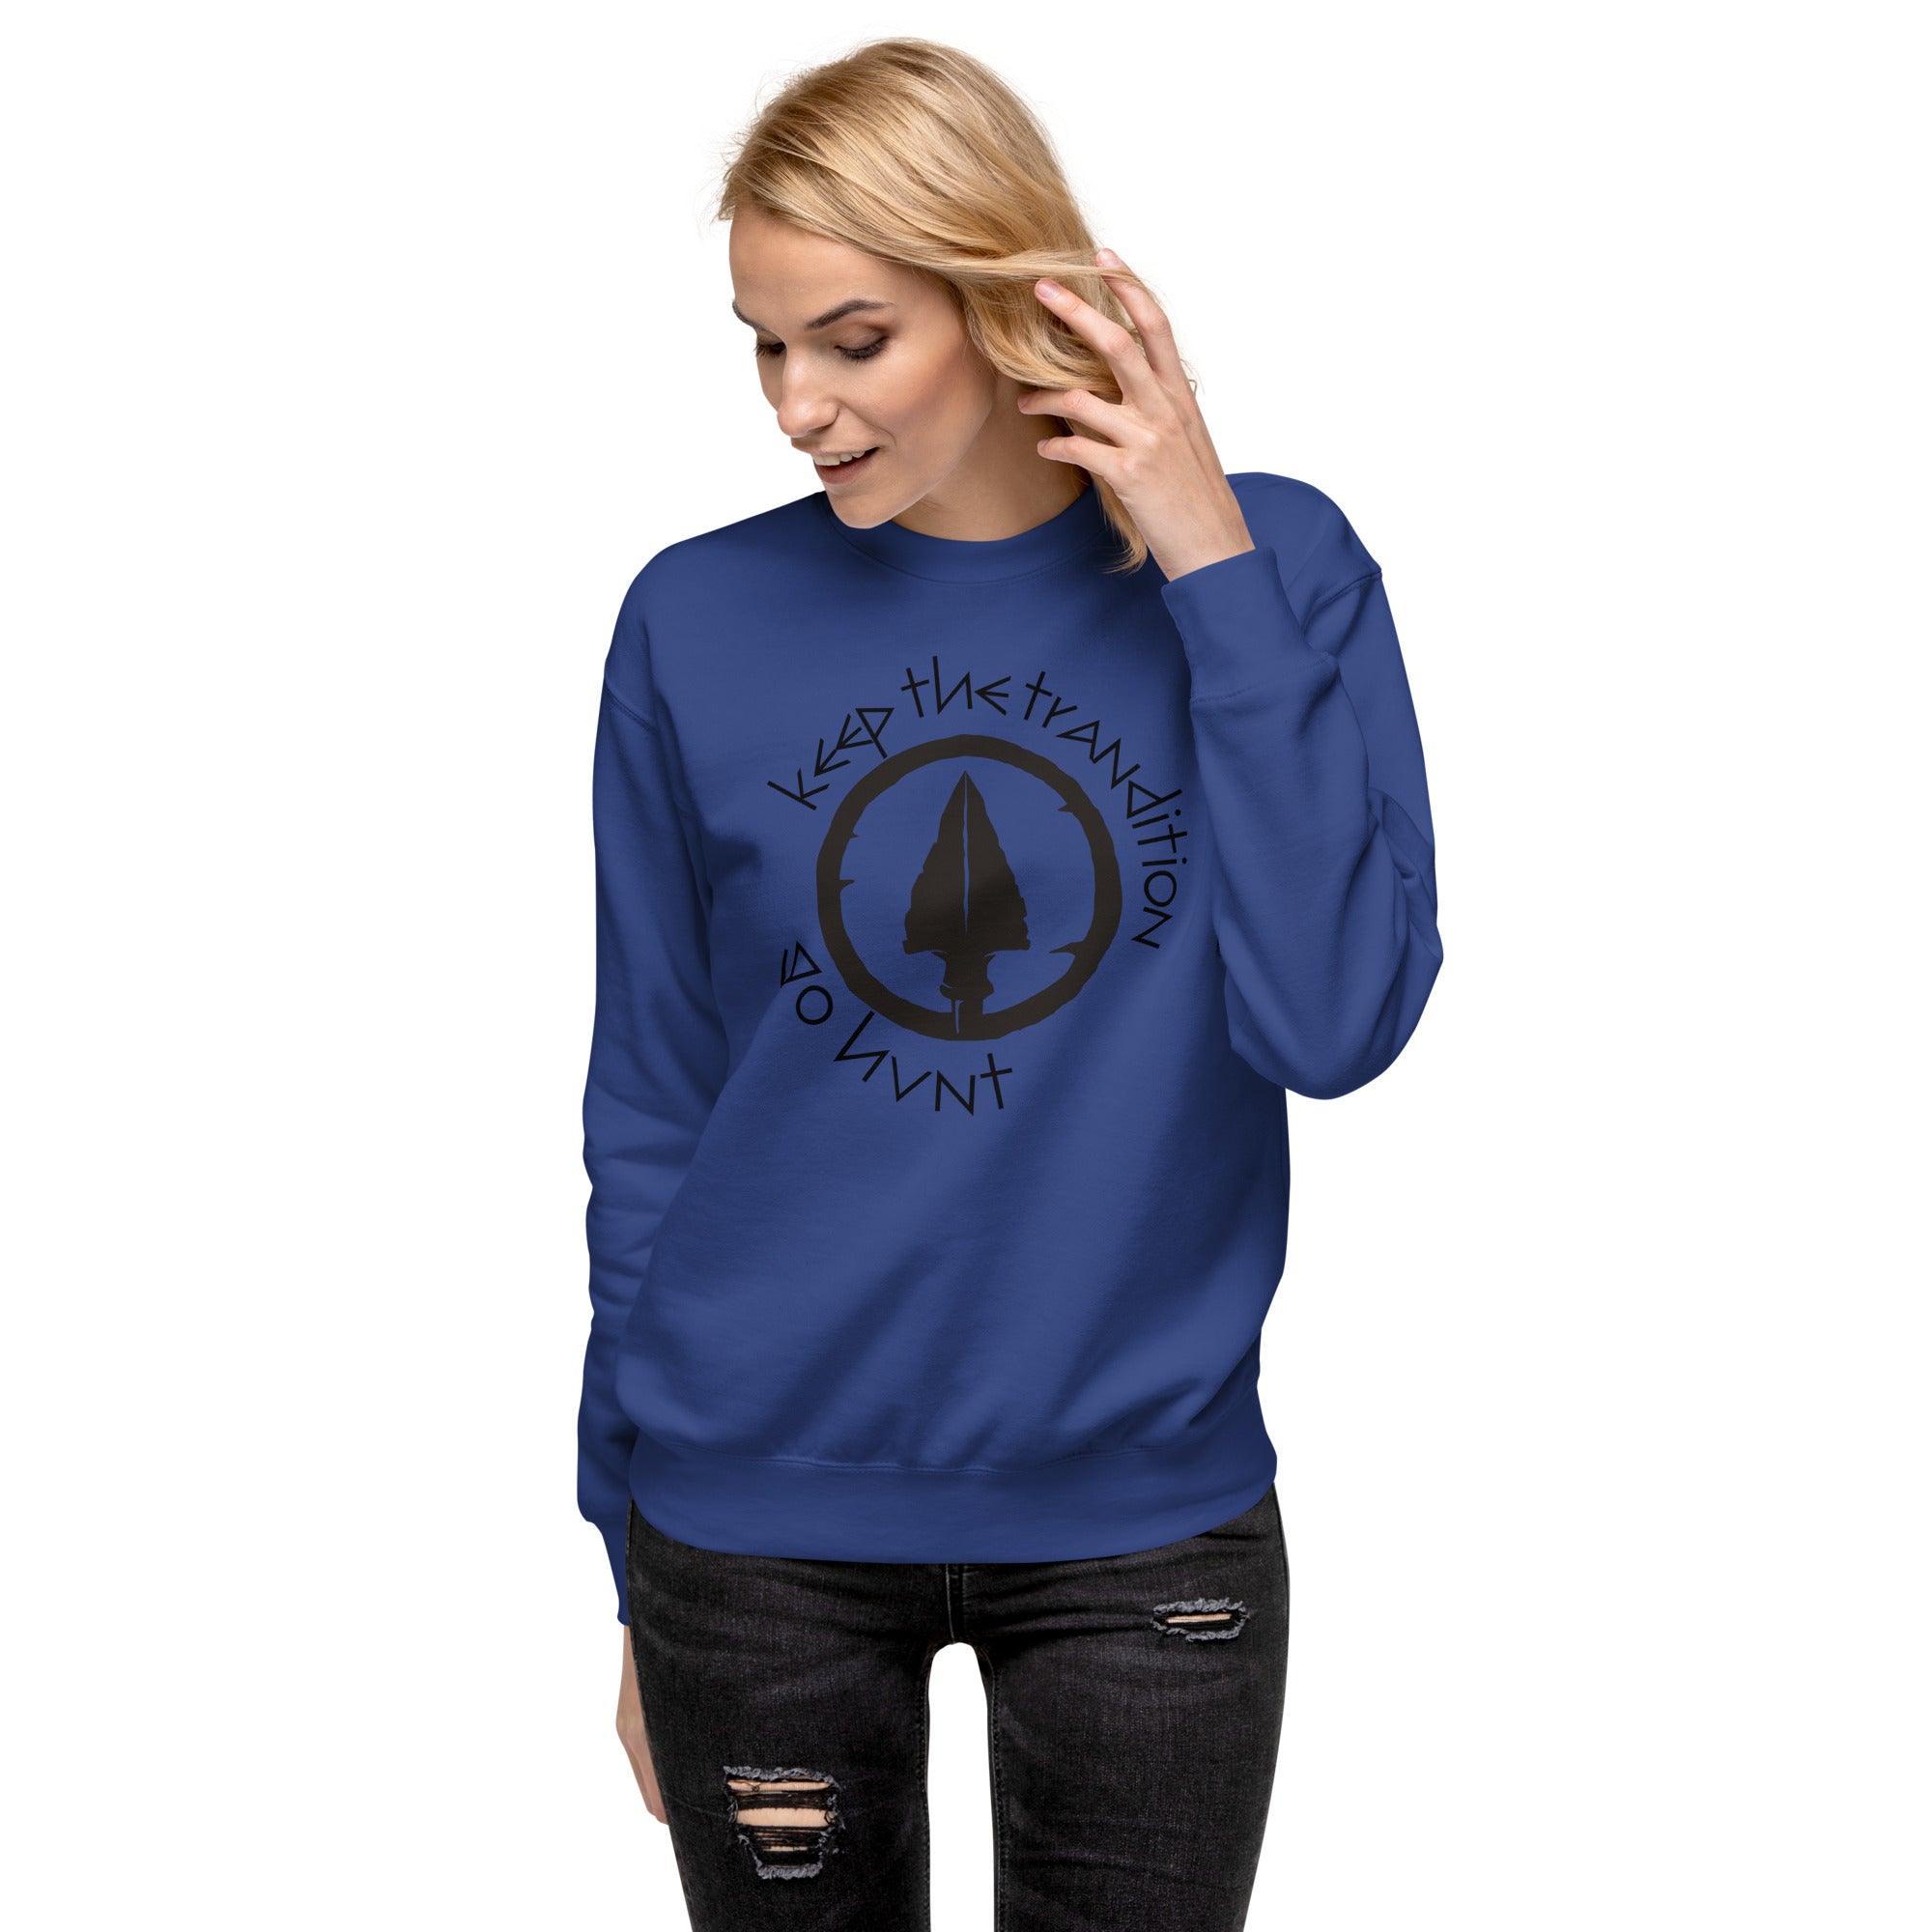 Keep The Tradition Women's Premium Sweatshirt - Go Hunt